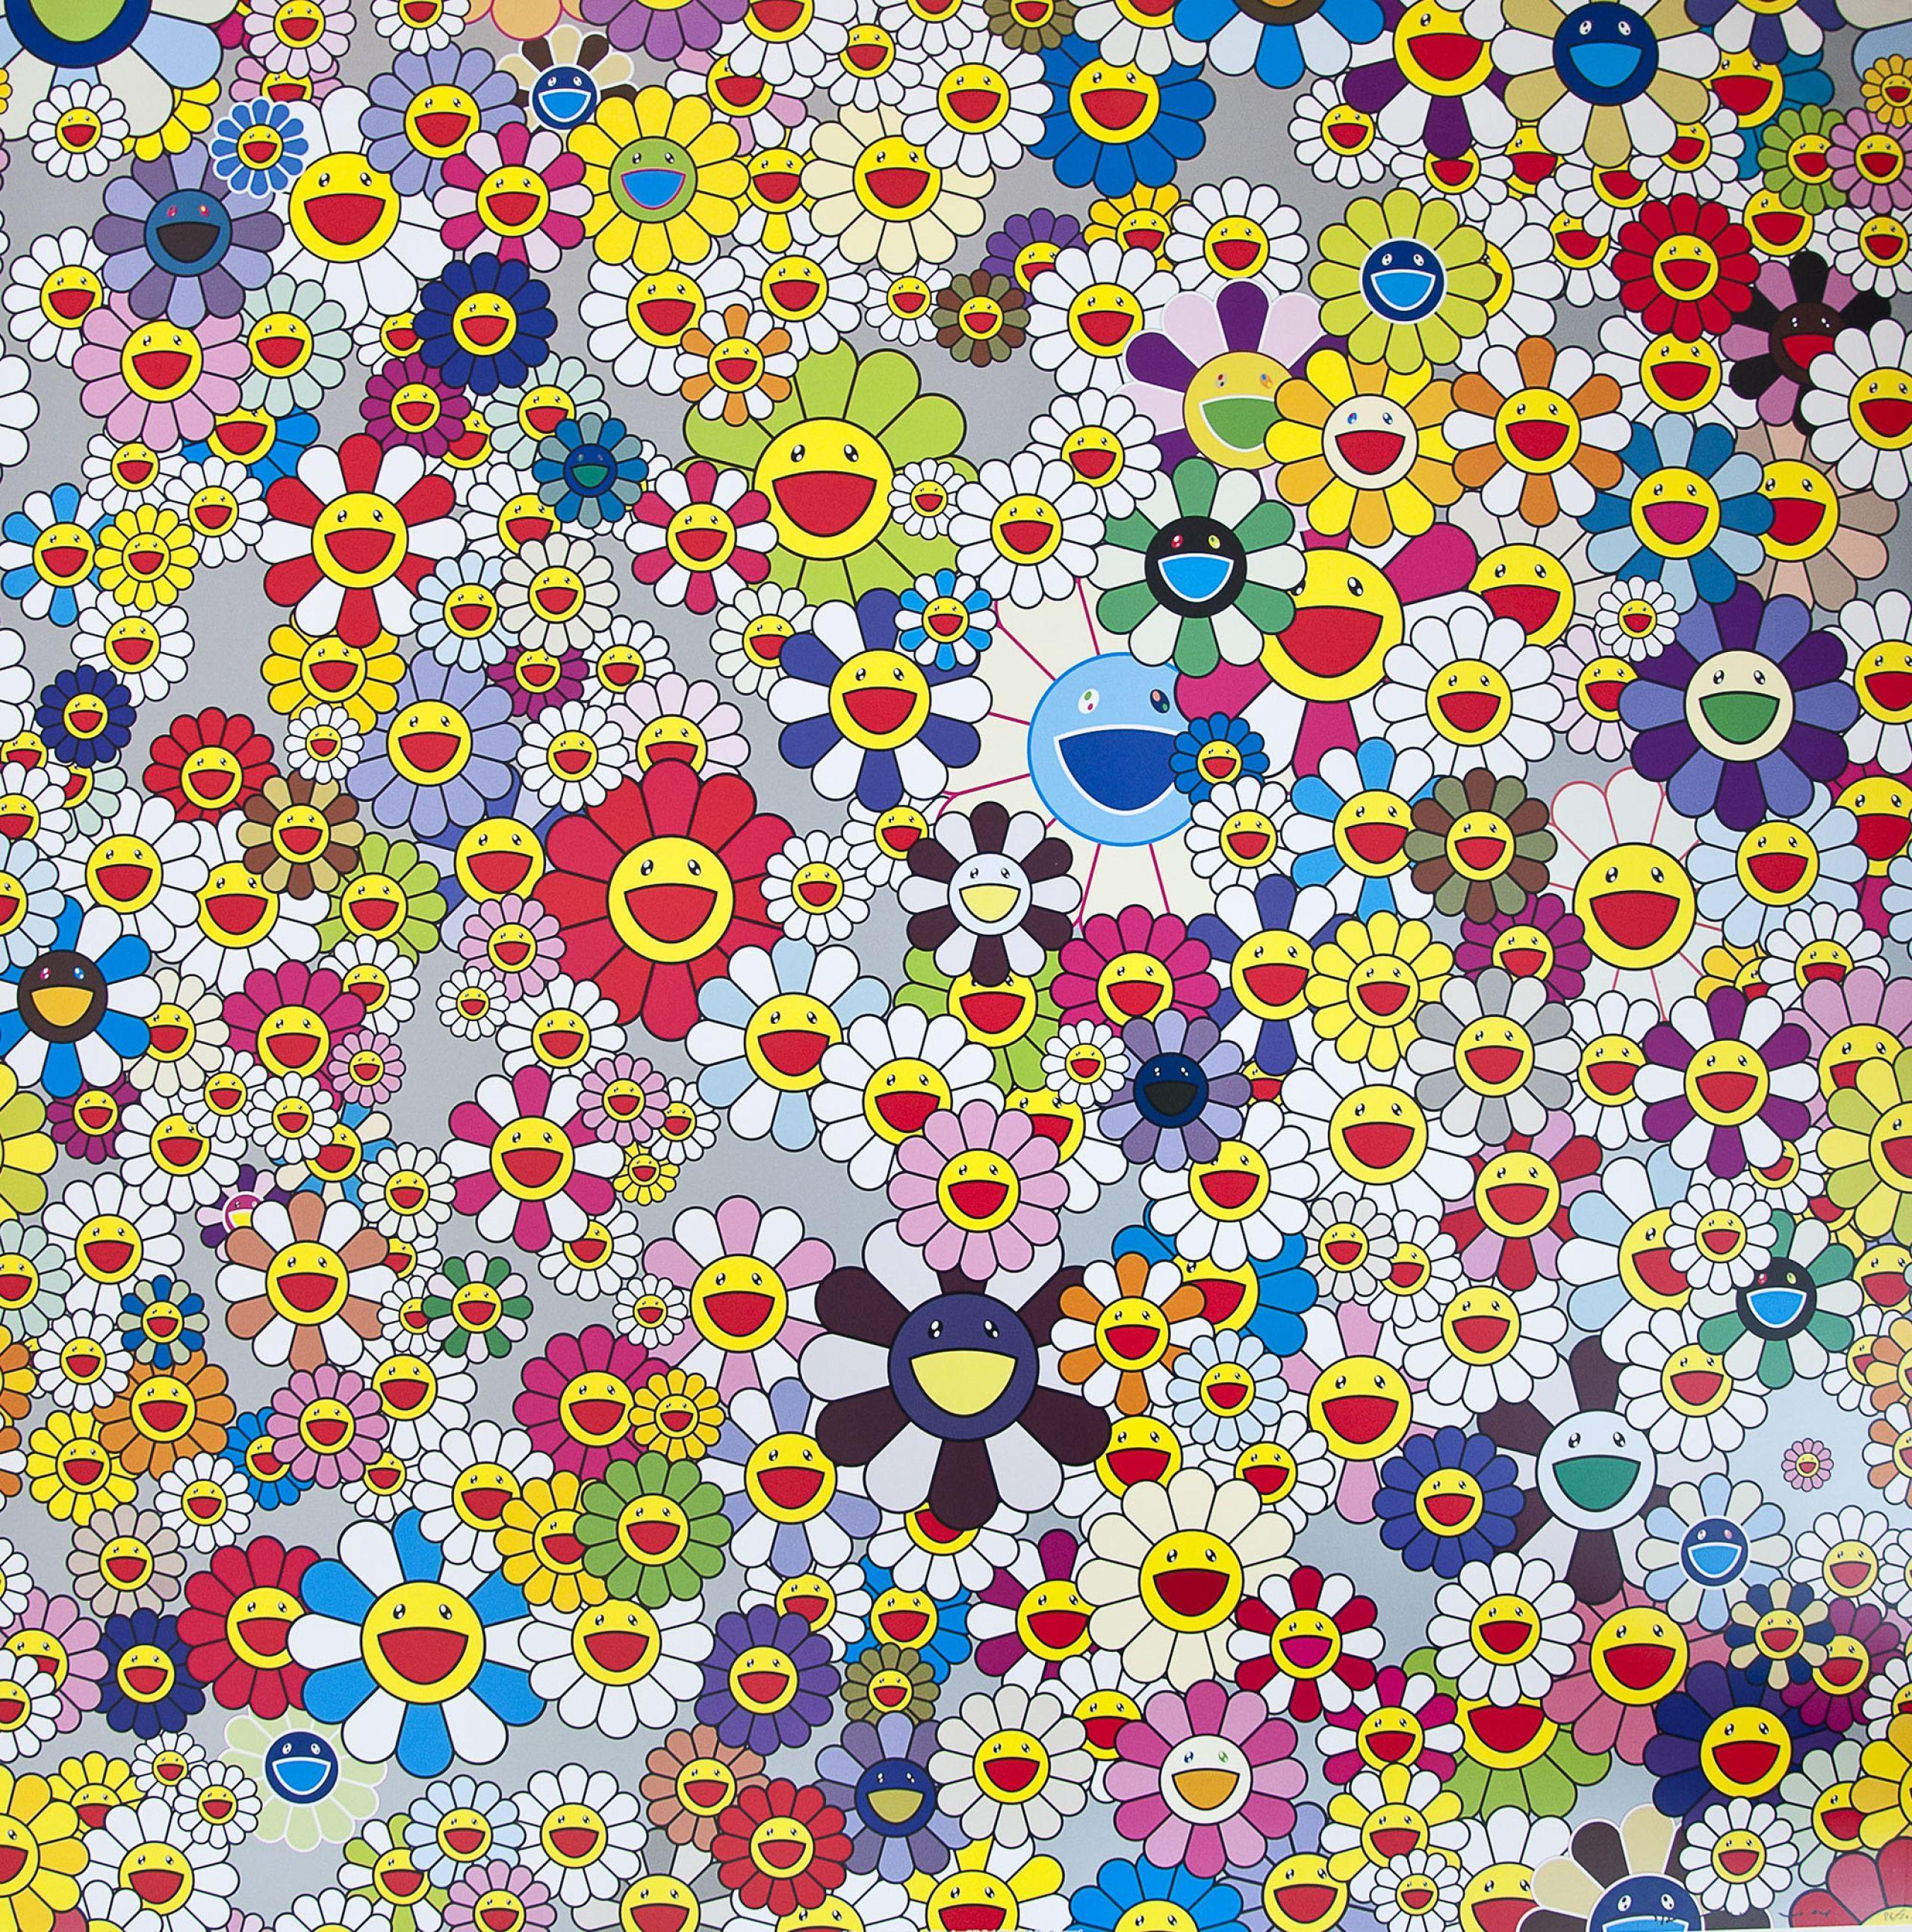 Download Dizzy Eyes Artwork in 4k by Takashi Murakami Wallpaper